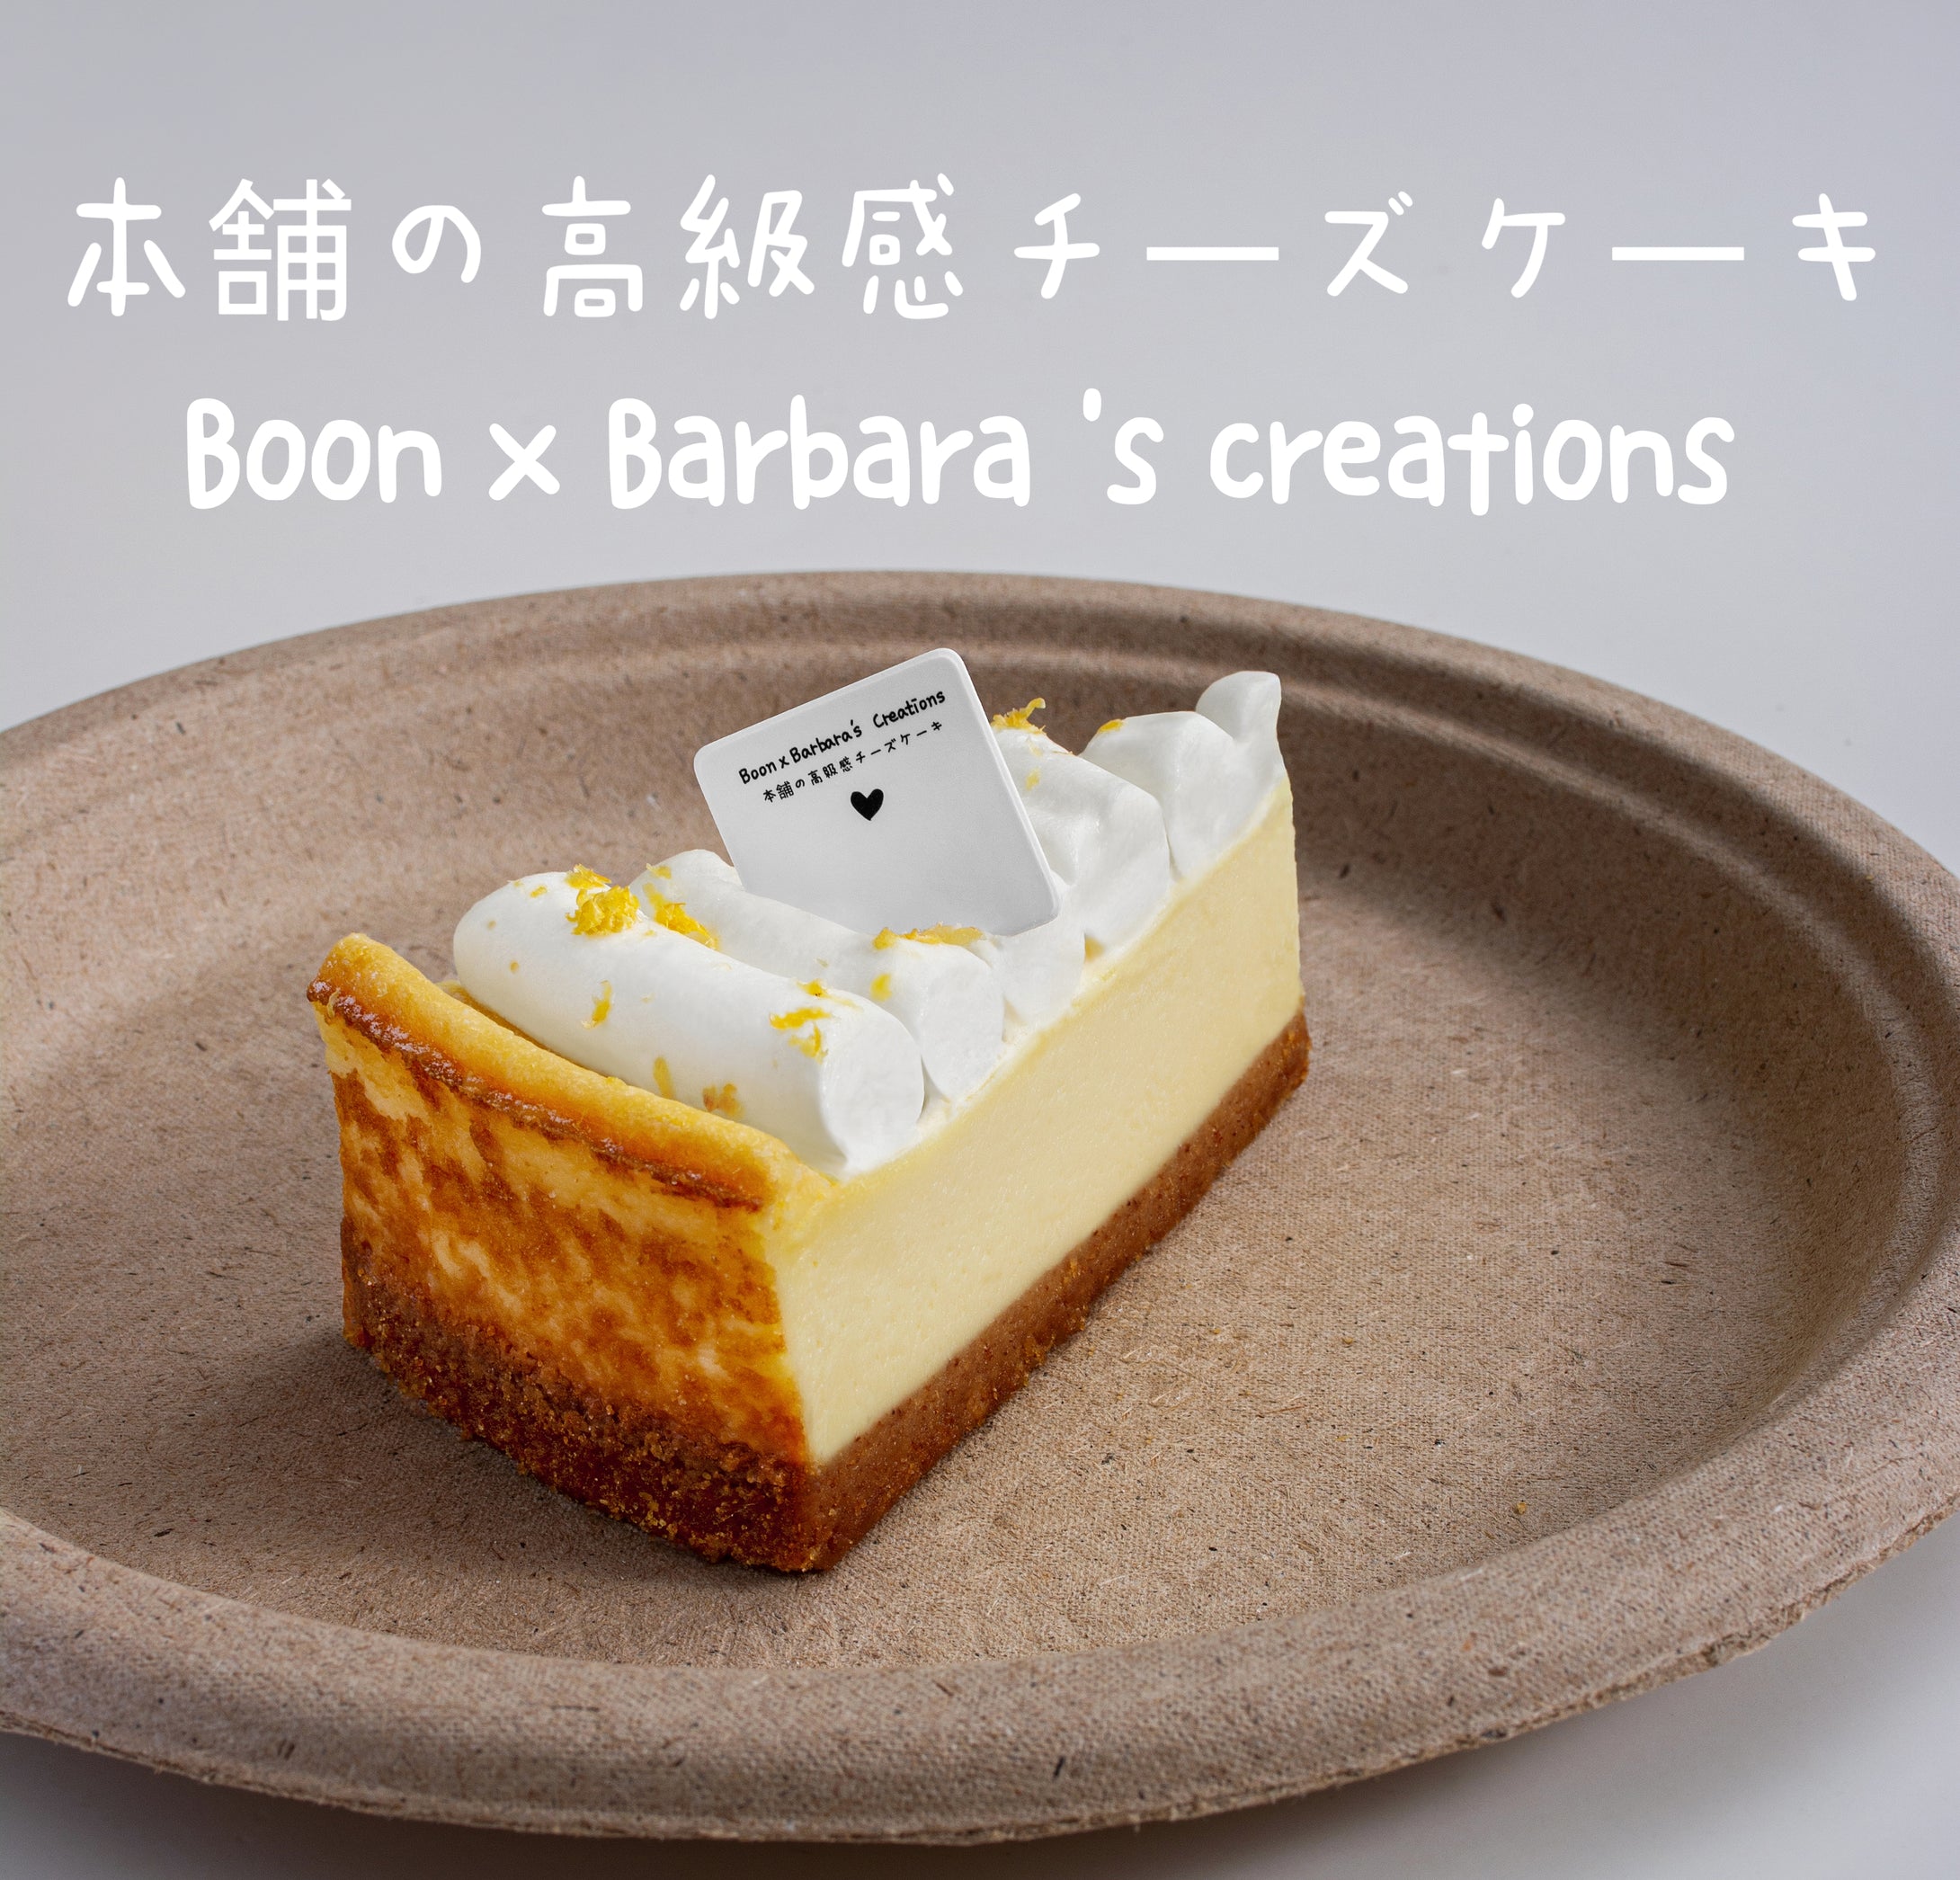 Boon x Barbara 's creations 
本舗の高級感チーズケーキ (11s)£ *